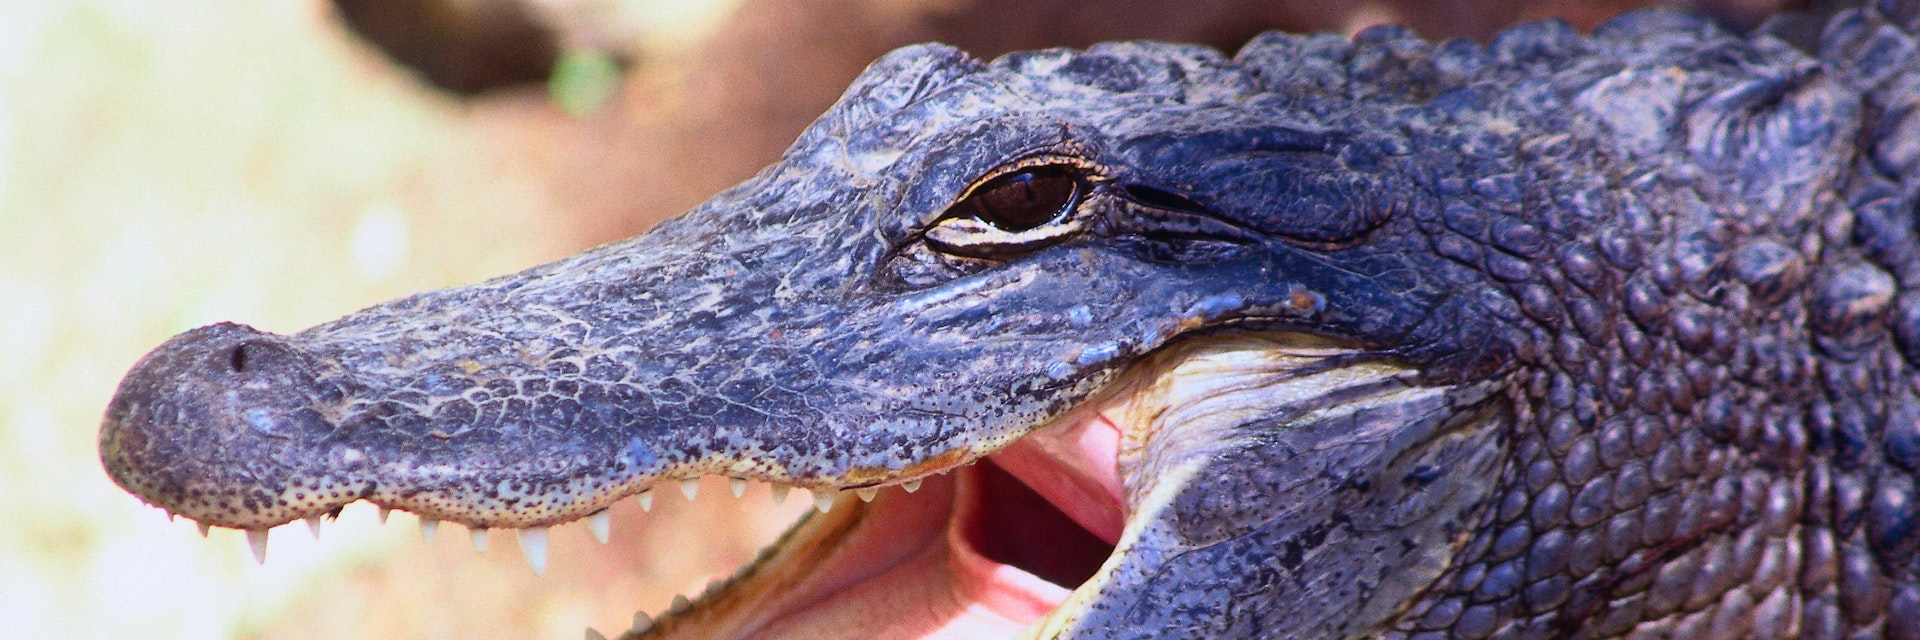 Alligator ( Alligator mississippiensis ) yawning - Florida